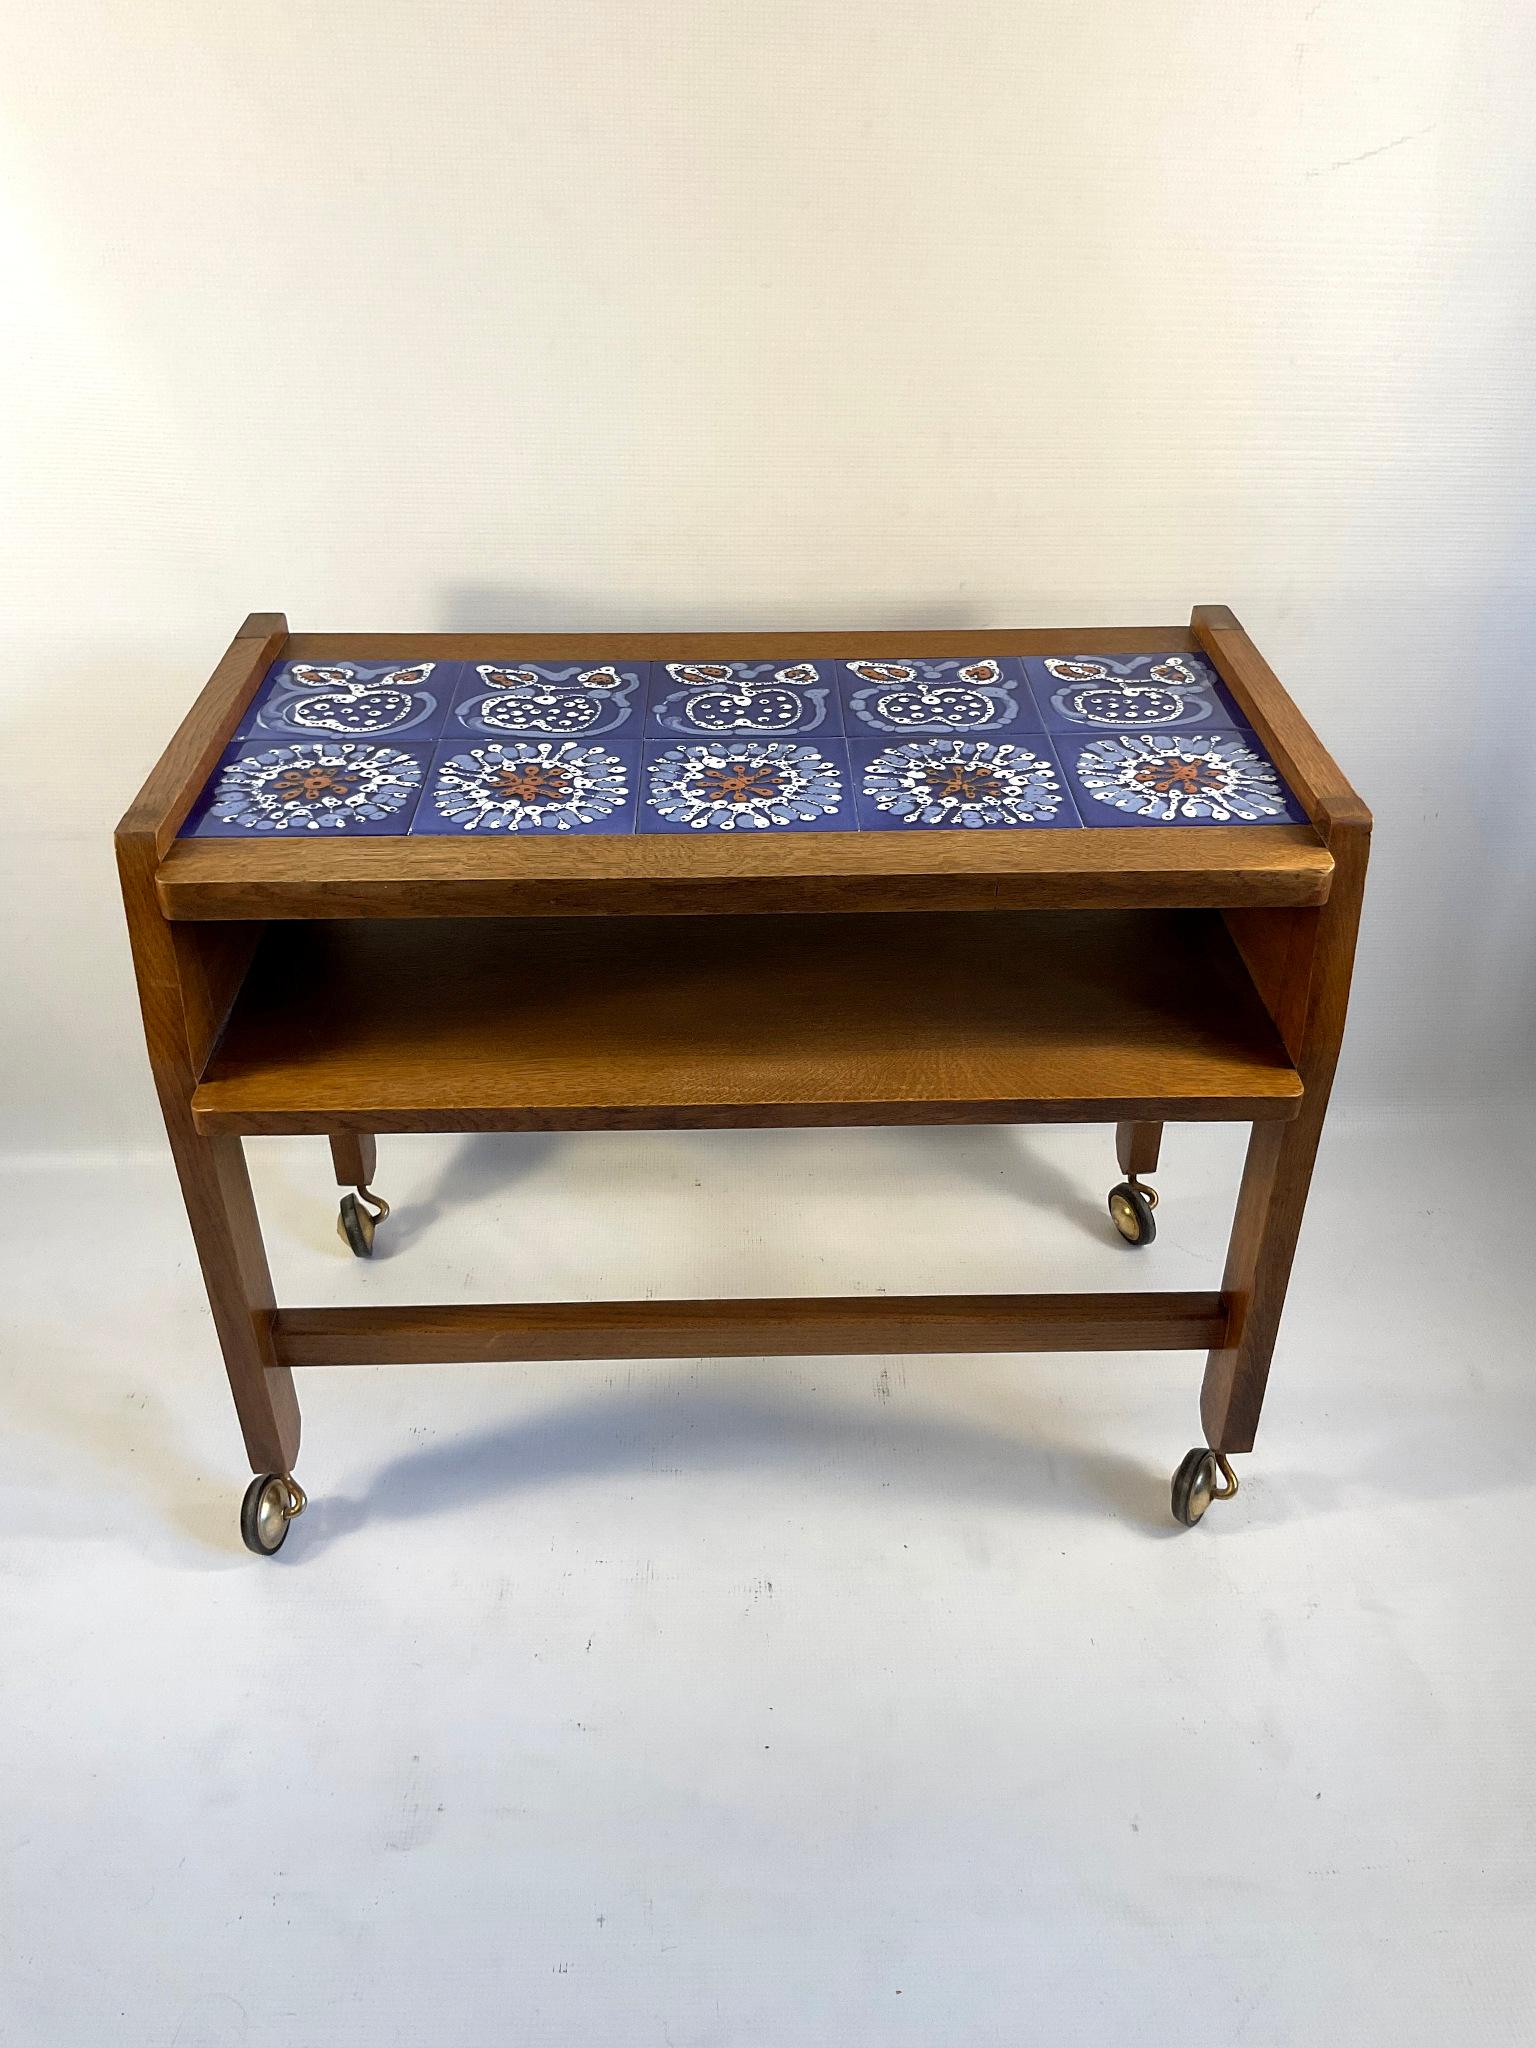 1960s Guillerme et Chambron Oak Side Table with Blue Ceramics Tiles Top For Sale 1